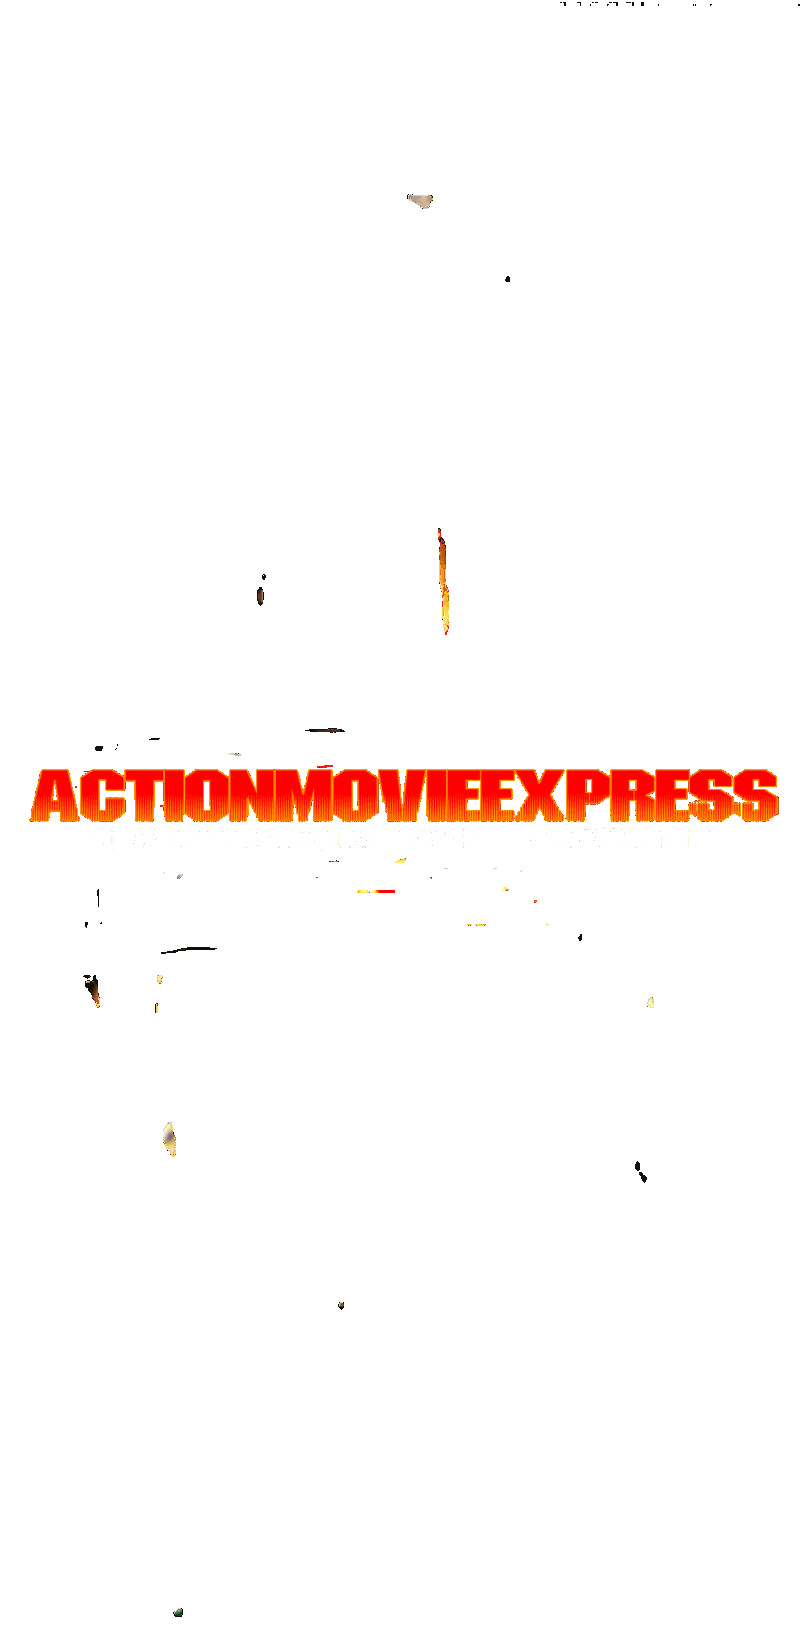 New LOGO "ActionMovieExpress": Logo310